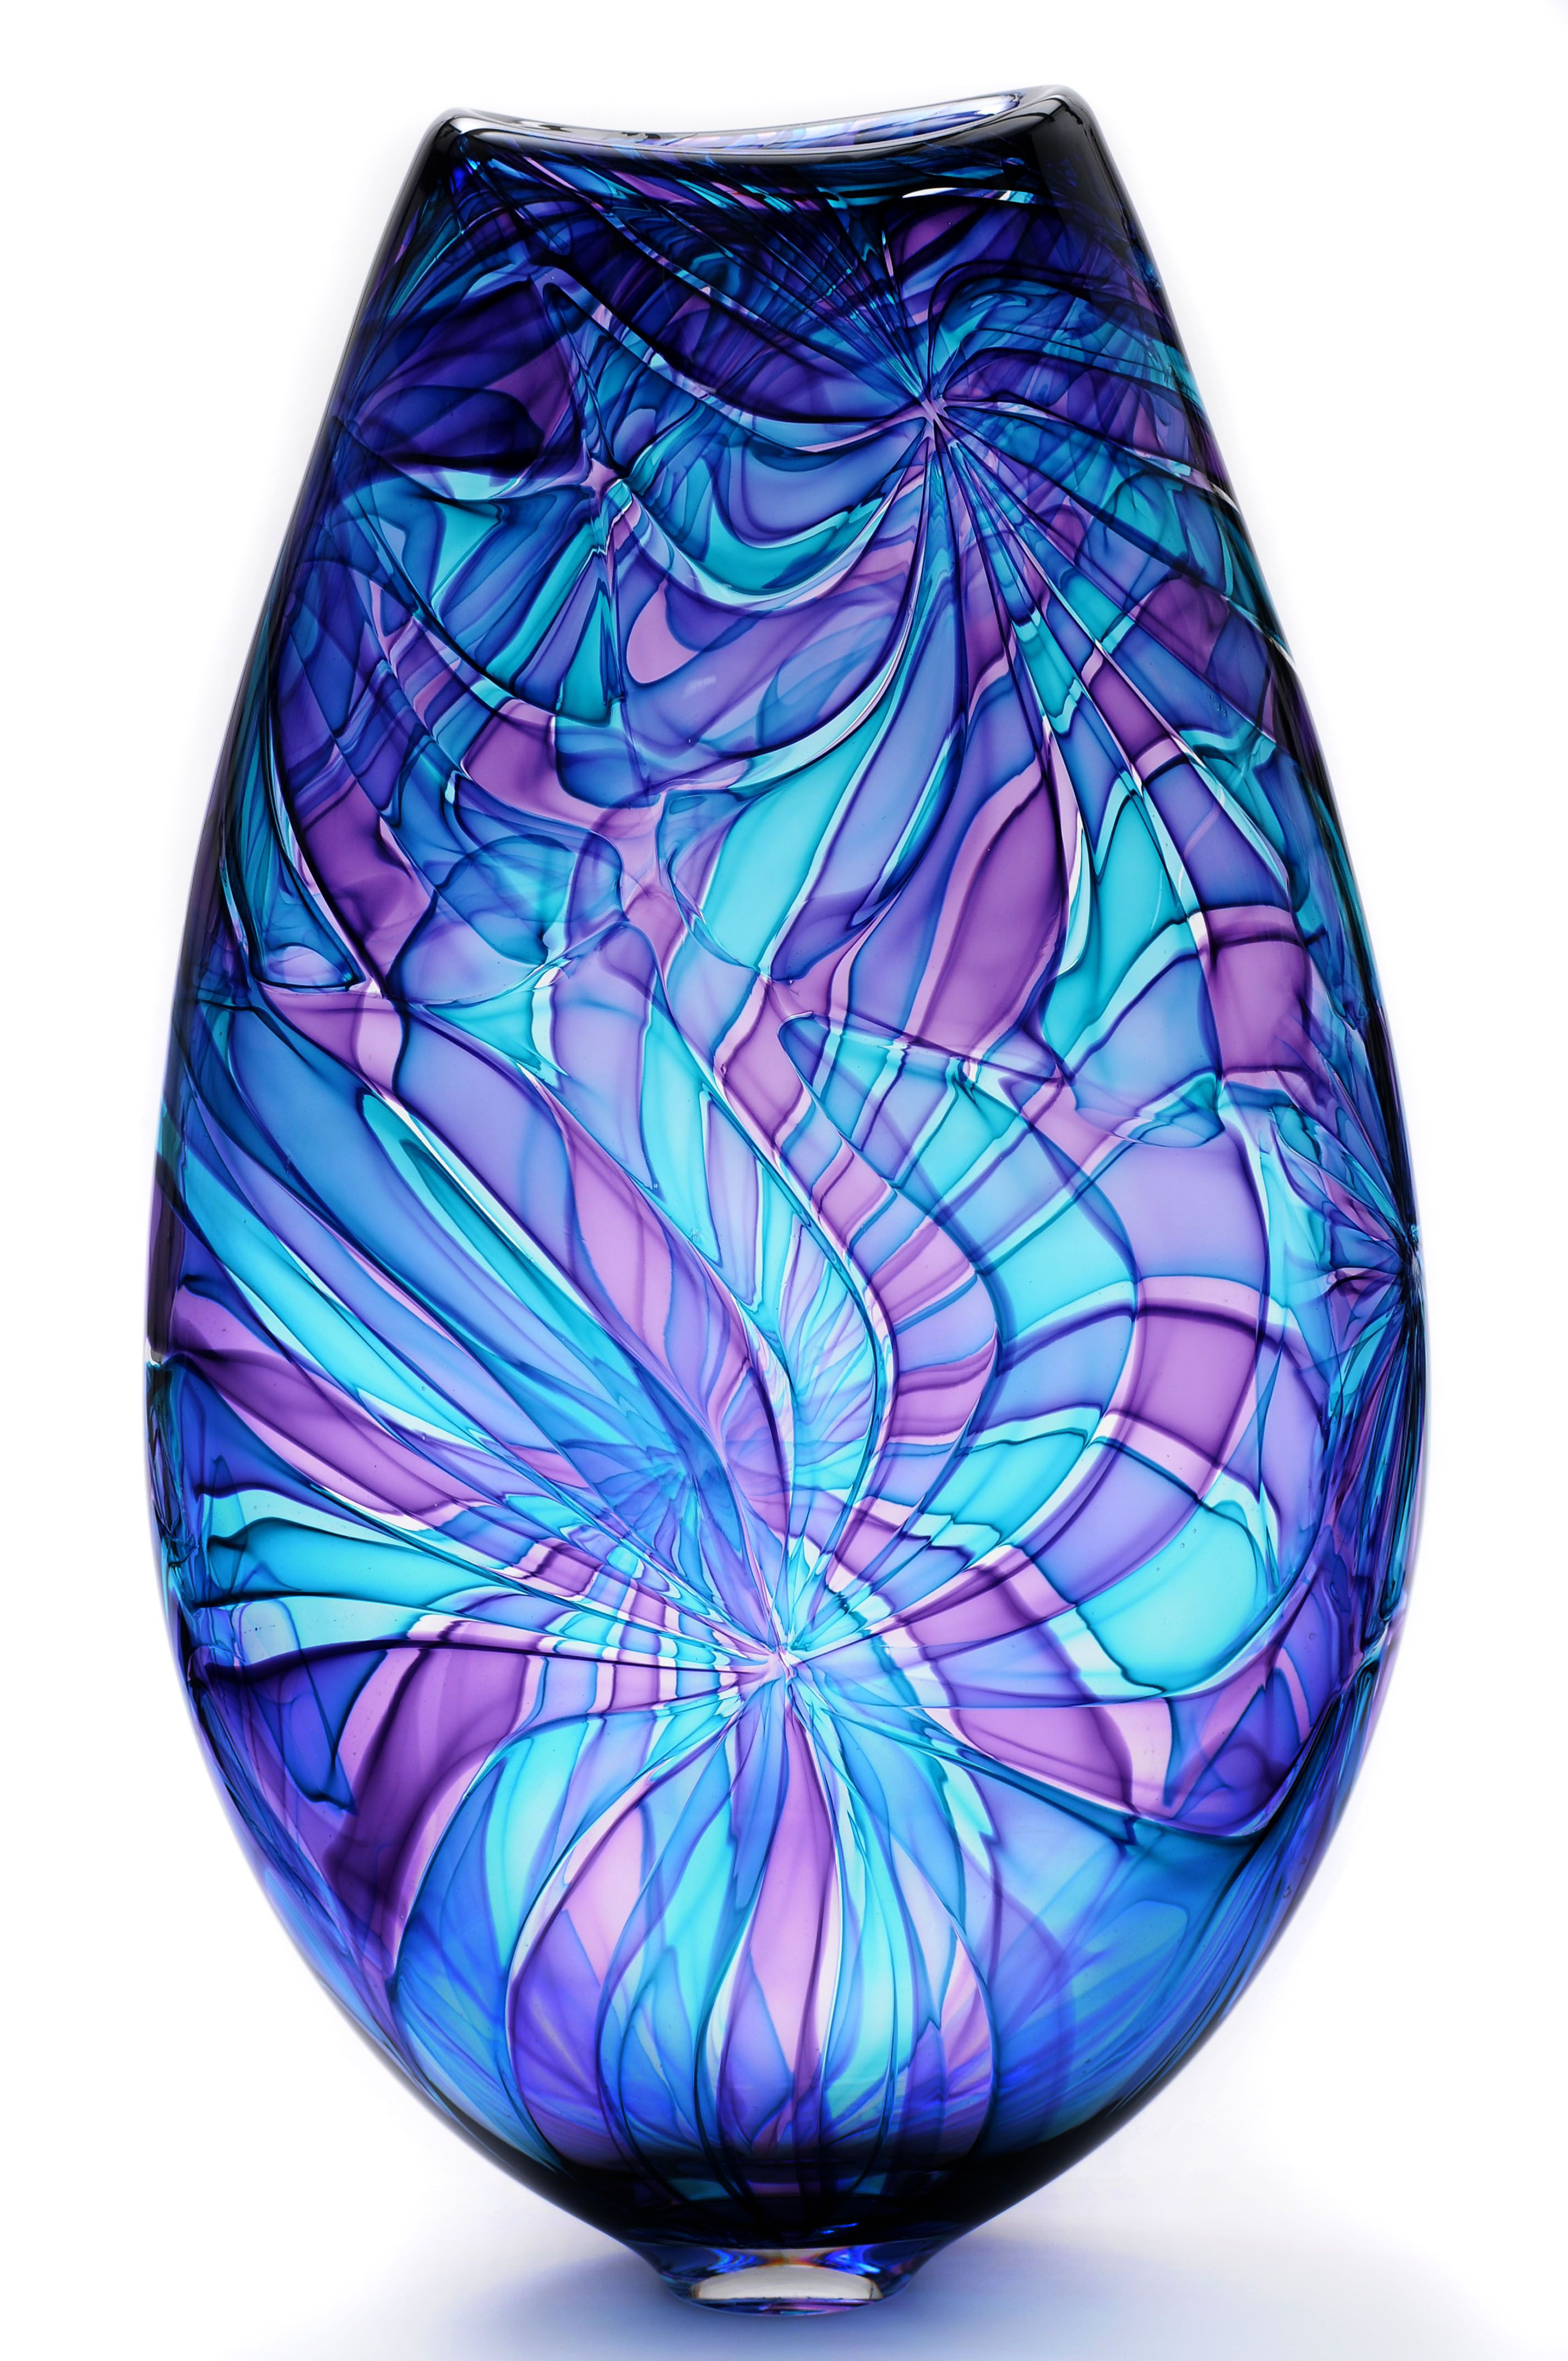 Hand Blown Glass Vases Bowls Of Bob Crooks Glass Art Vase I Love Blue and Purple together Art Inside Bob Crooks Glass Art Vase I Love Blue and Purple together